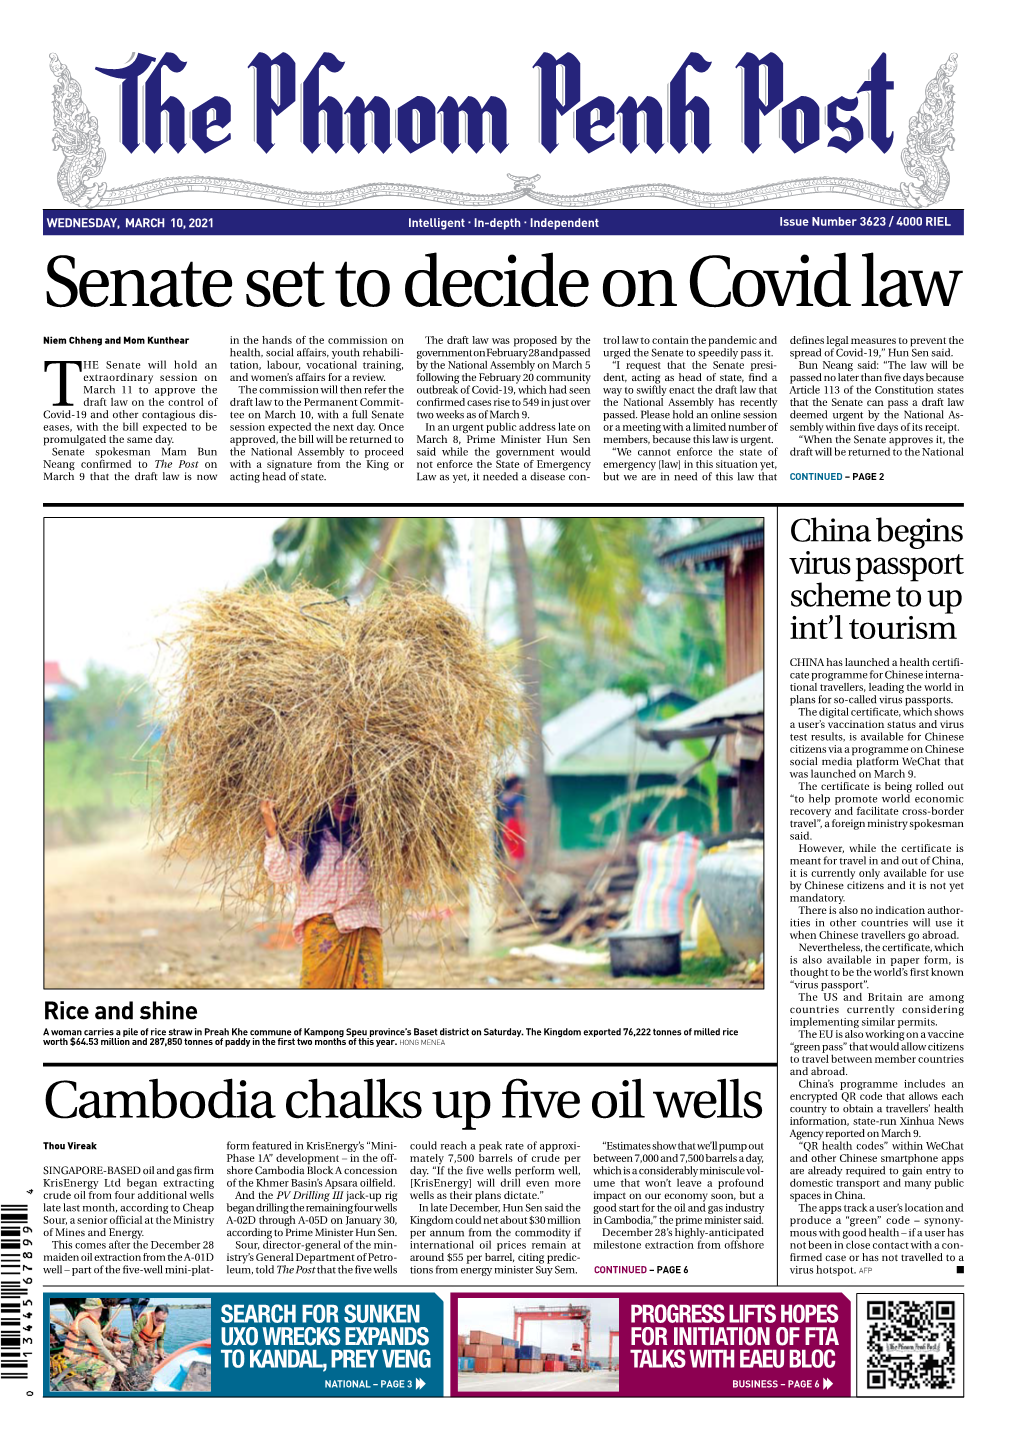 Senate Set to Decide on Covid Law